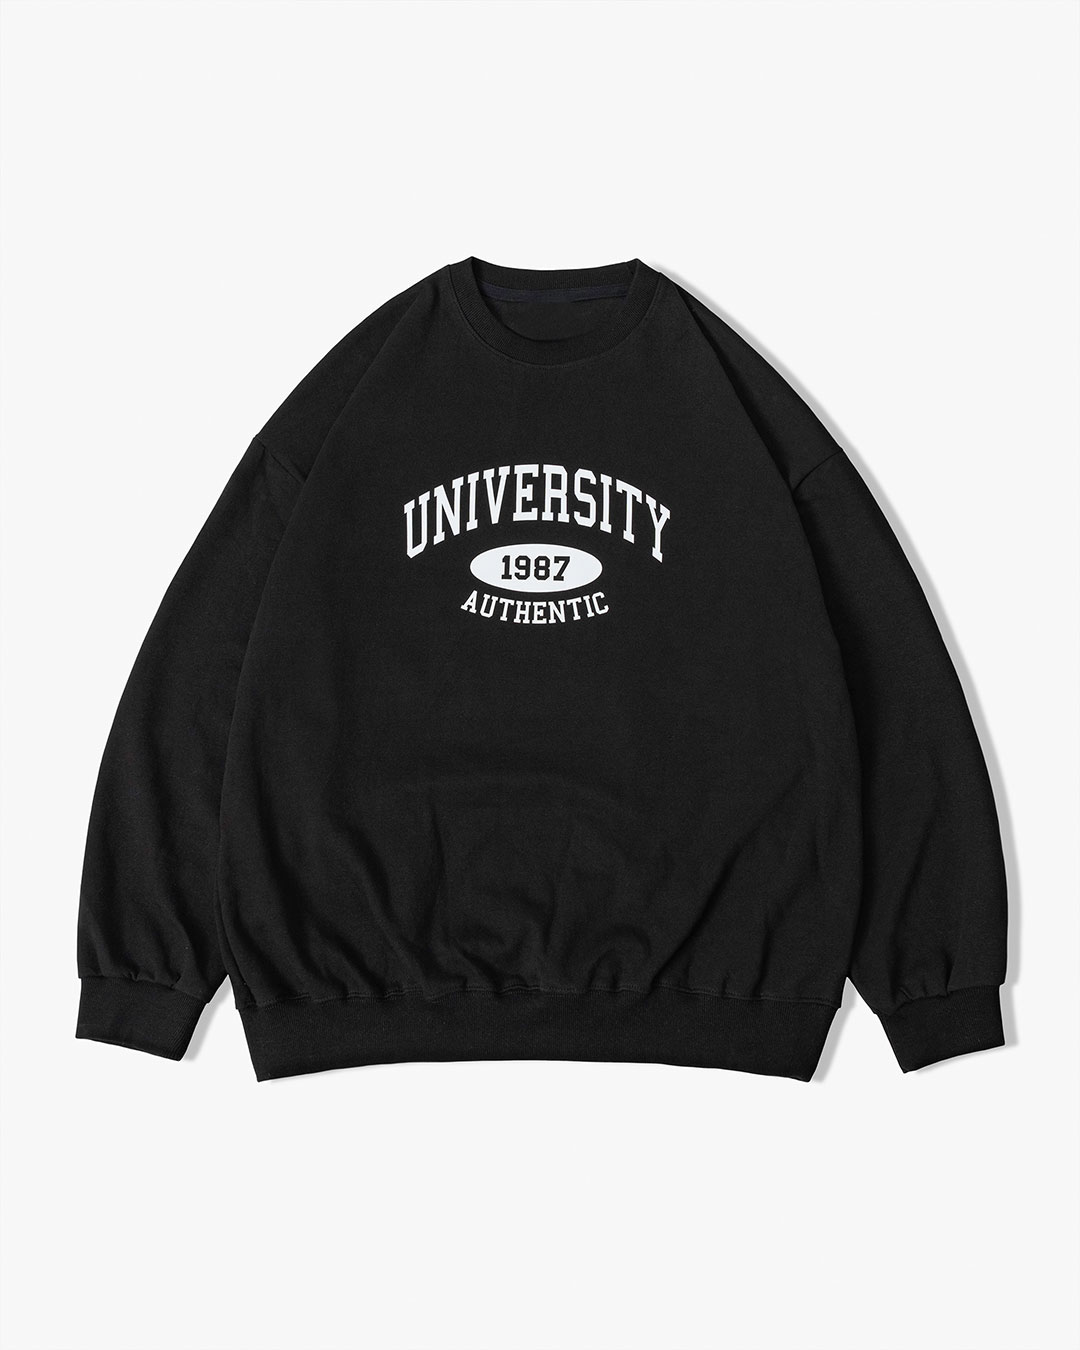 University Overfit mtm (Black)